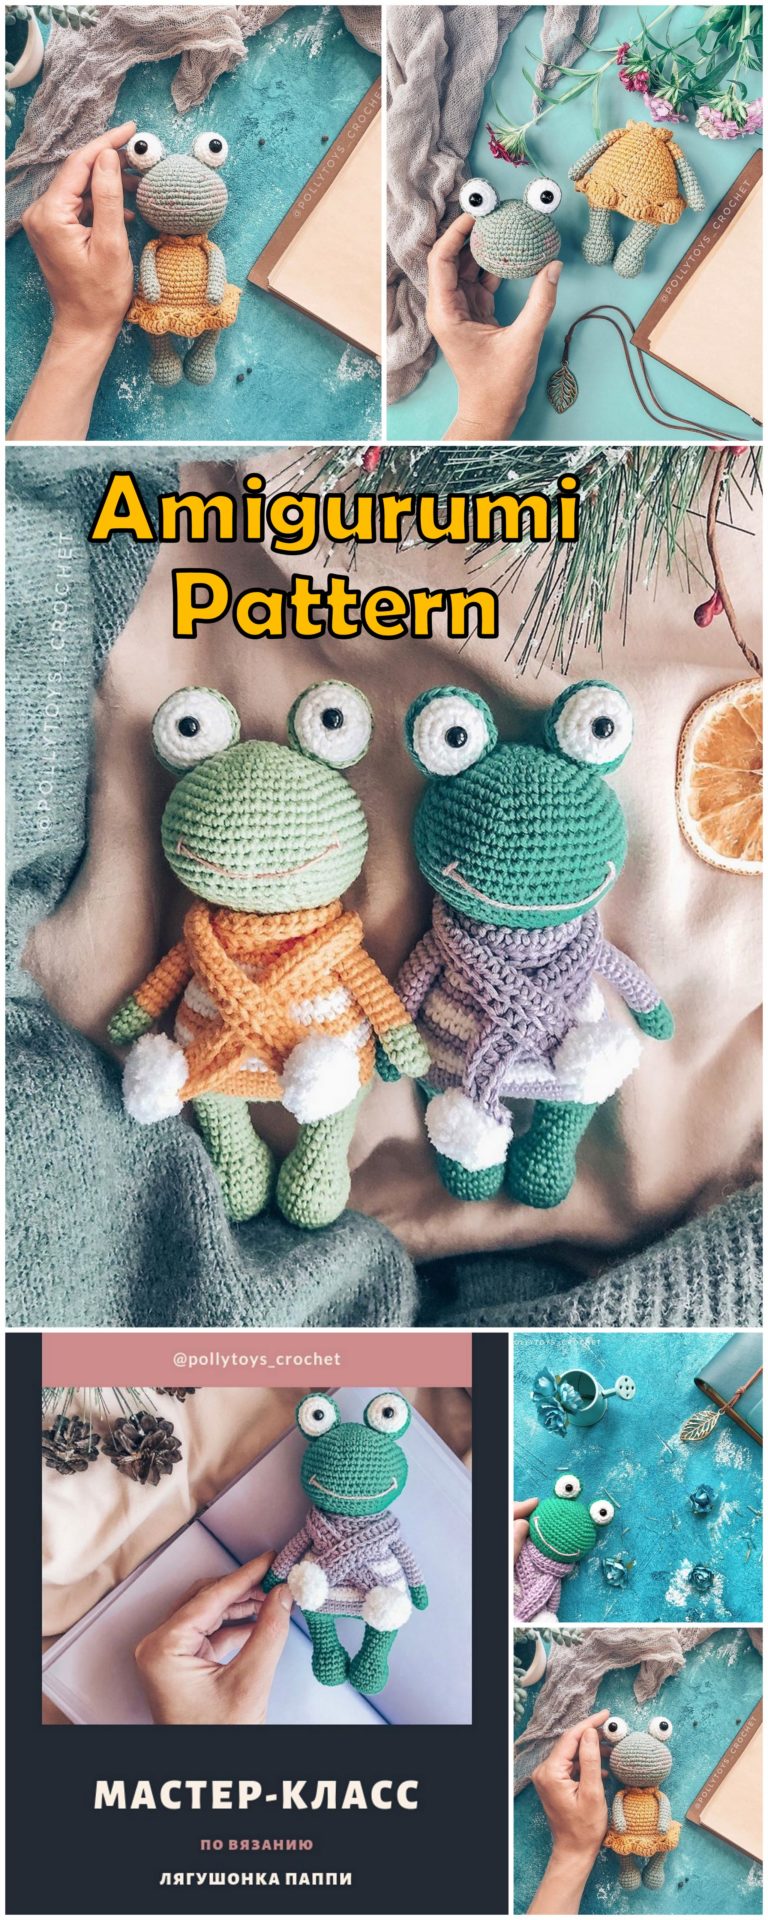 Amigurumi Doll And Animal 21 Top Best Free Crochet Patterns